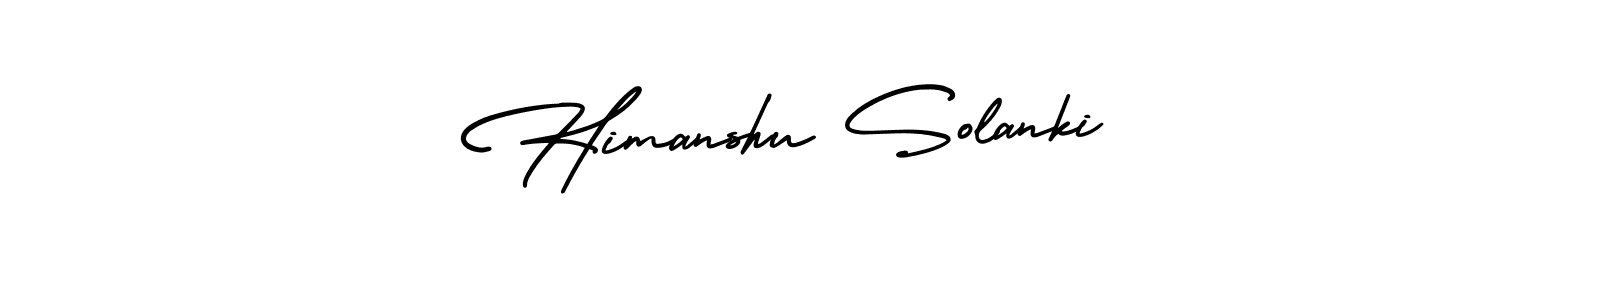 How to Draw Himanshu Solanki signature style? AmerikaSignatureDemo-Regular is a latest design signature styles for name Himanshu Solanki. Himanshu Solanki signature style 3 images and pictures png